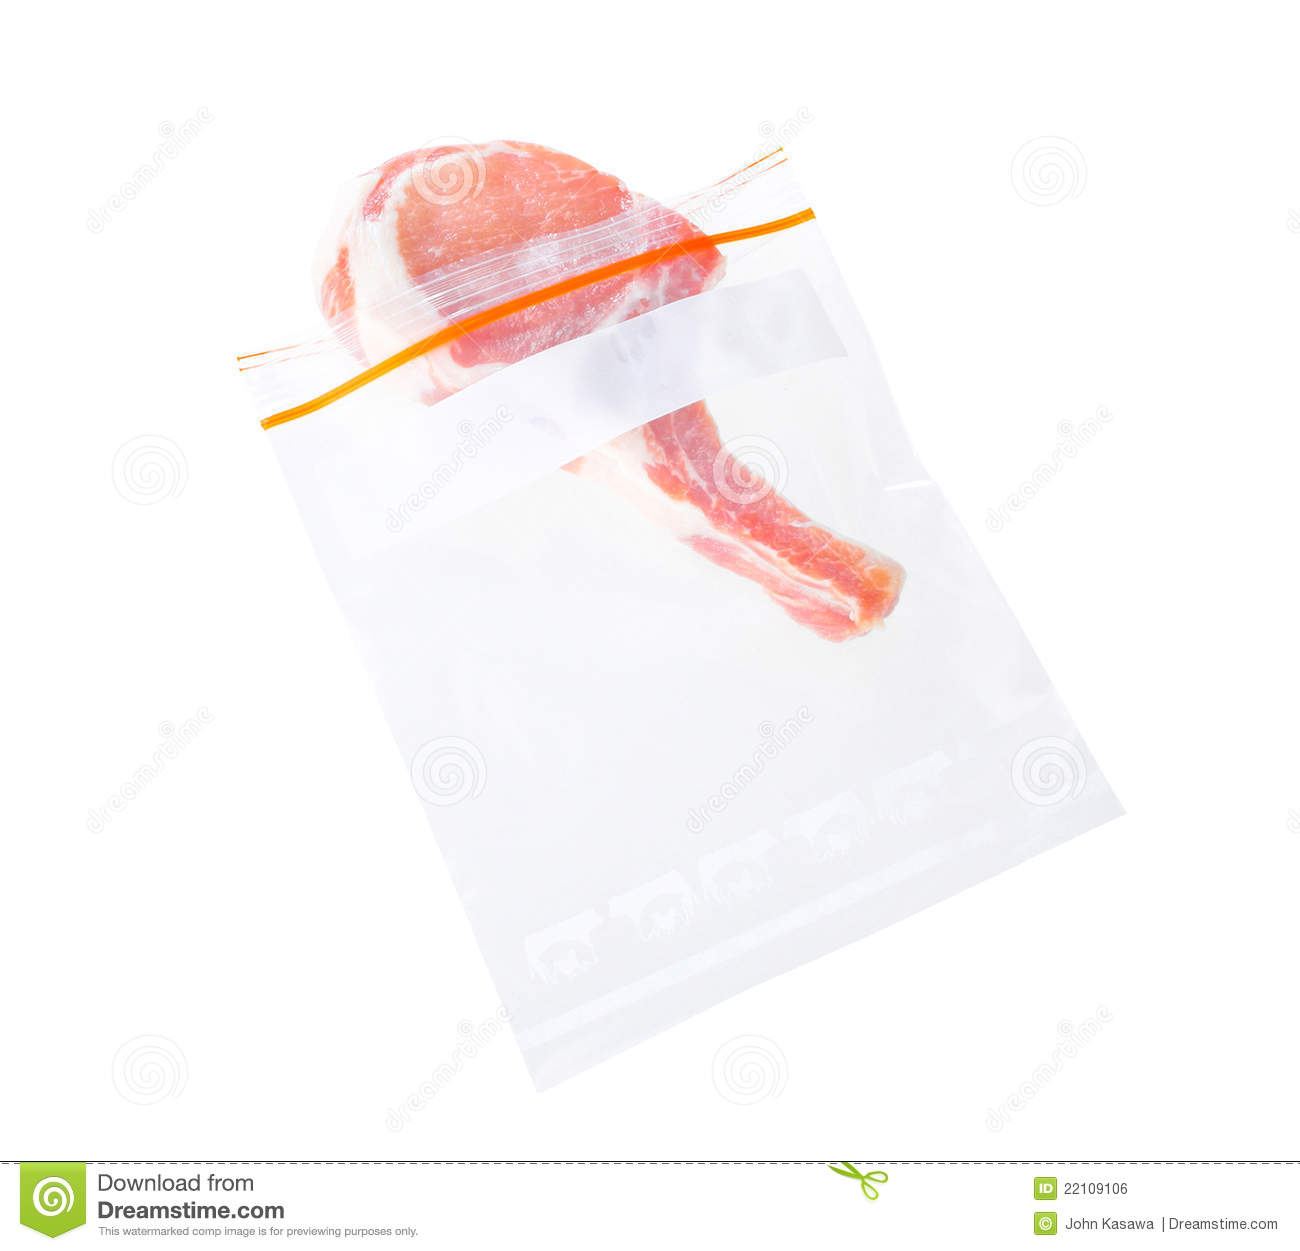 Pork In The Zipper Bag Royalty Free Stock Image   Image  22109106